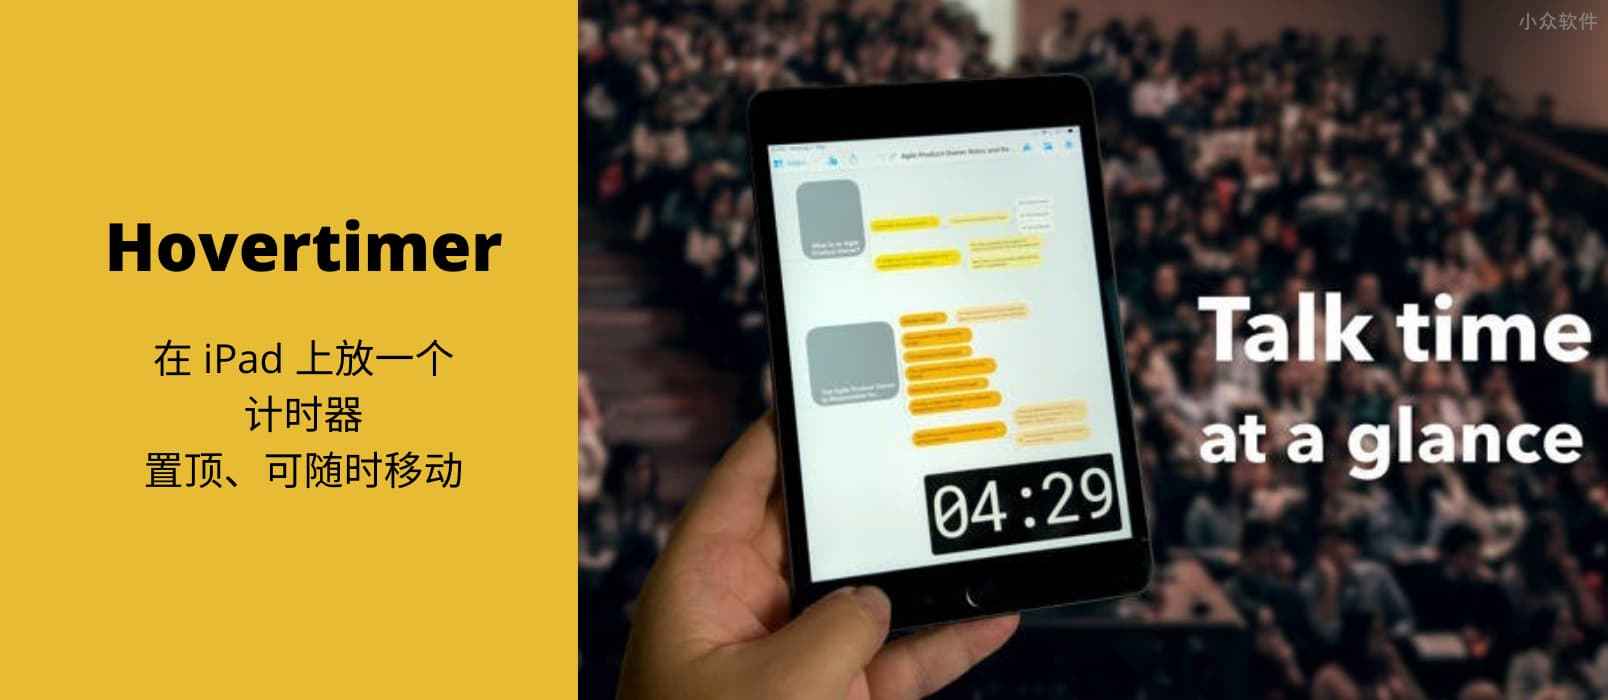 Hovertimer - 在 iPad 上放一个迷你计时器，置顶、可随时移动 1